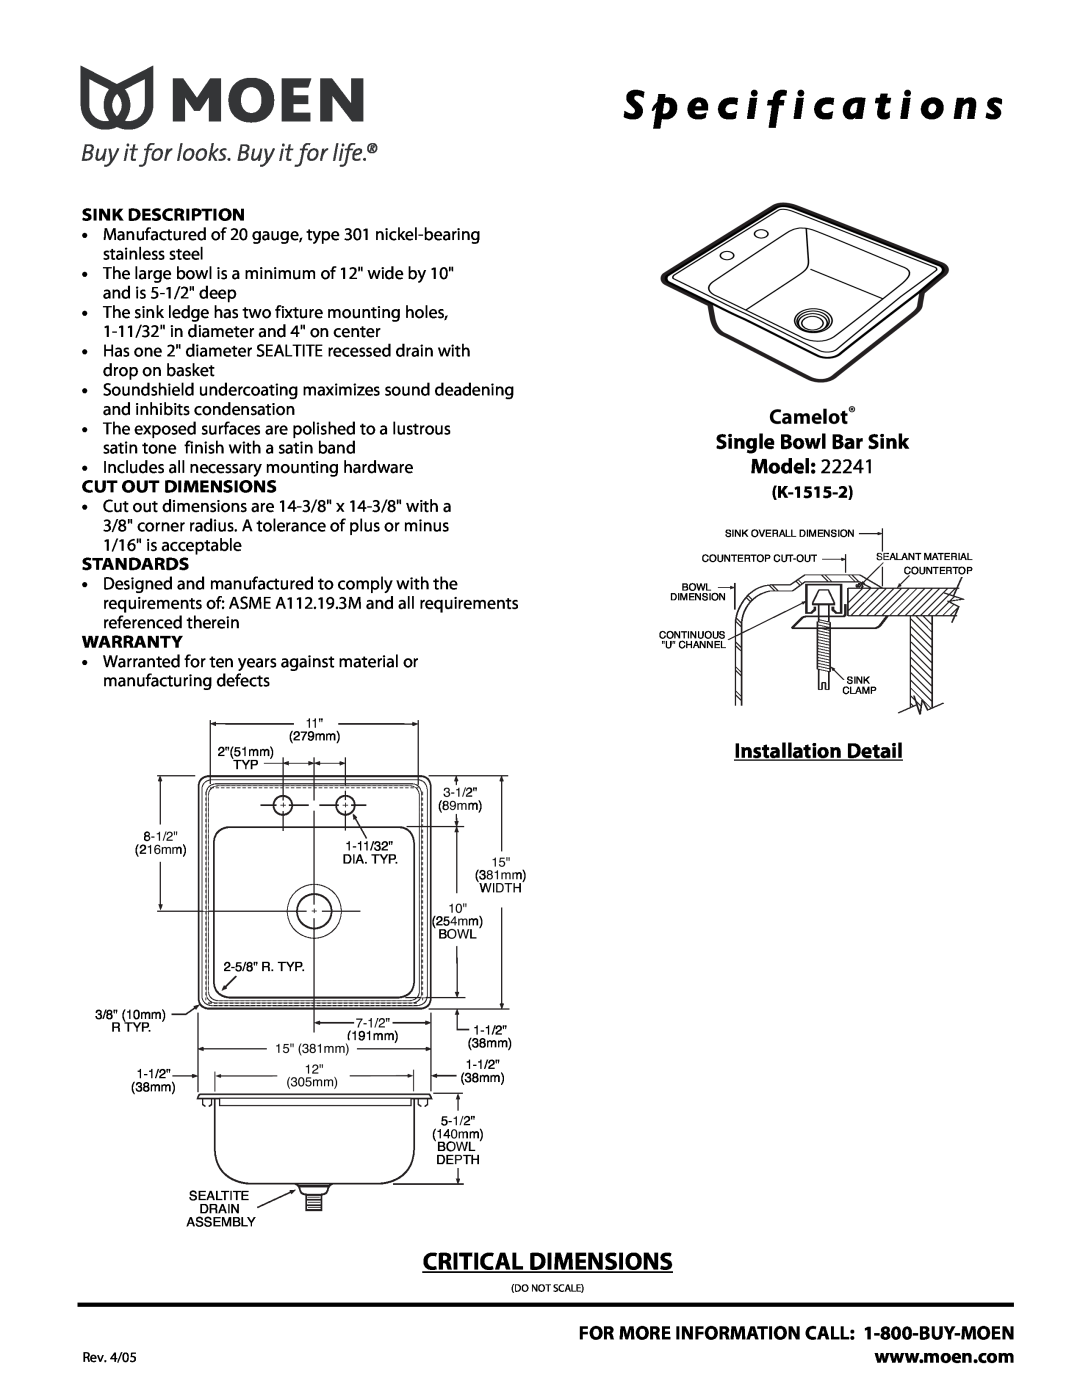 Moen K-1515-2, 22241 specifications S p e c i f i c a t i o n s, Critical Dimensions, Camelot Single Bowl Bar Sink Model 